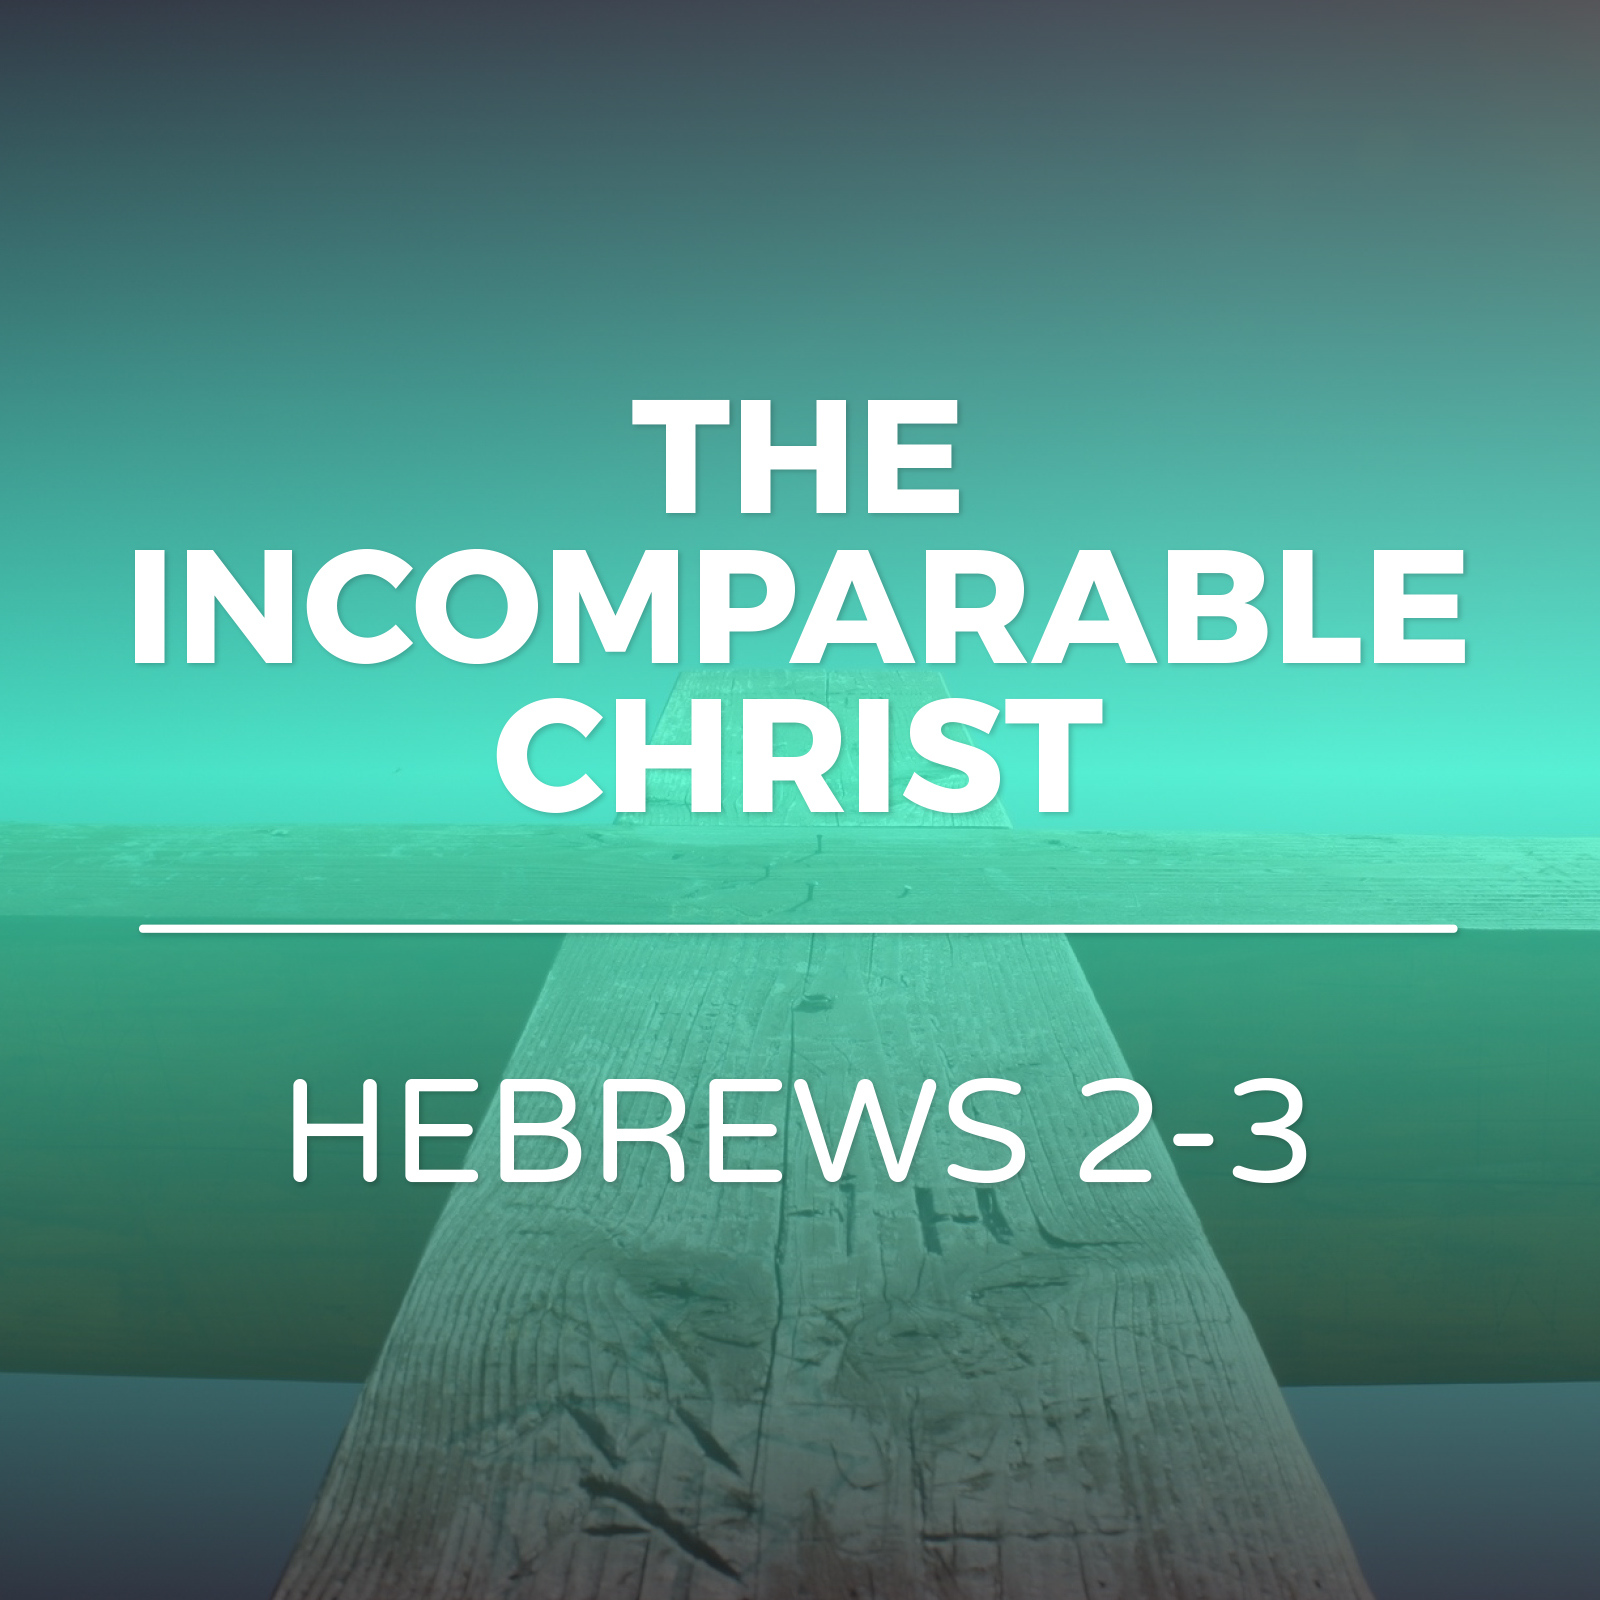 The Incomparable Christ - Hebrews 2-3 sermon series - Hope Church Huddersfield